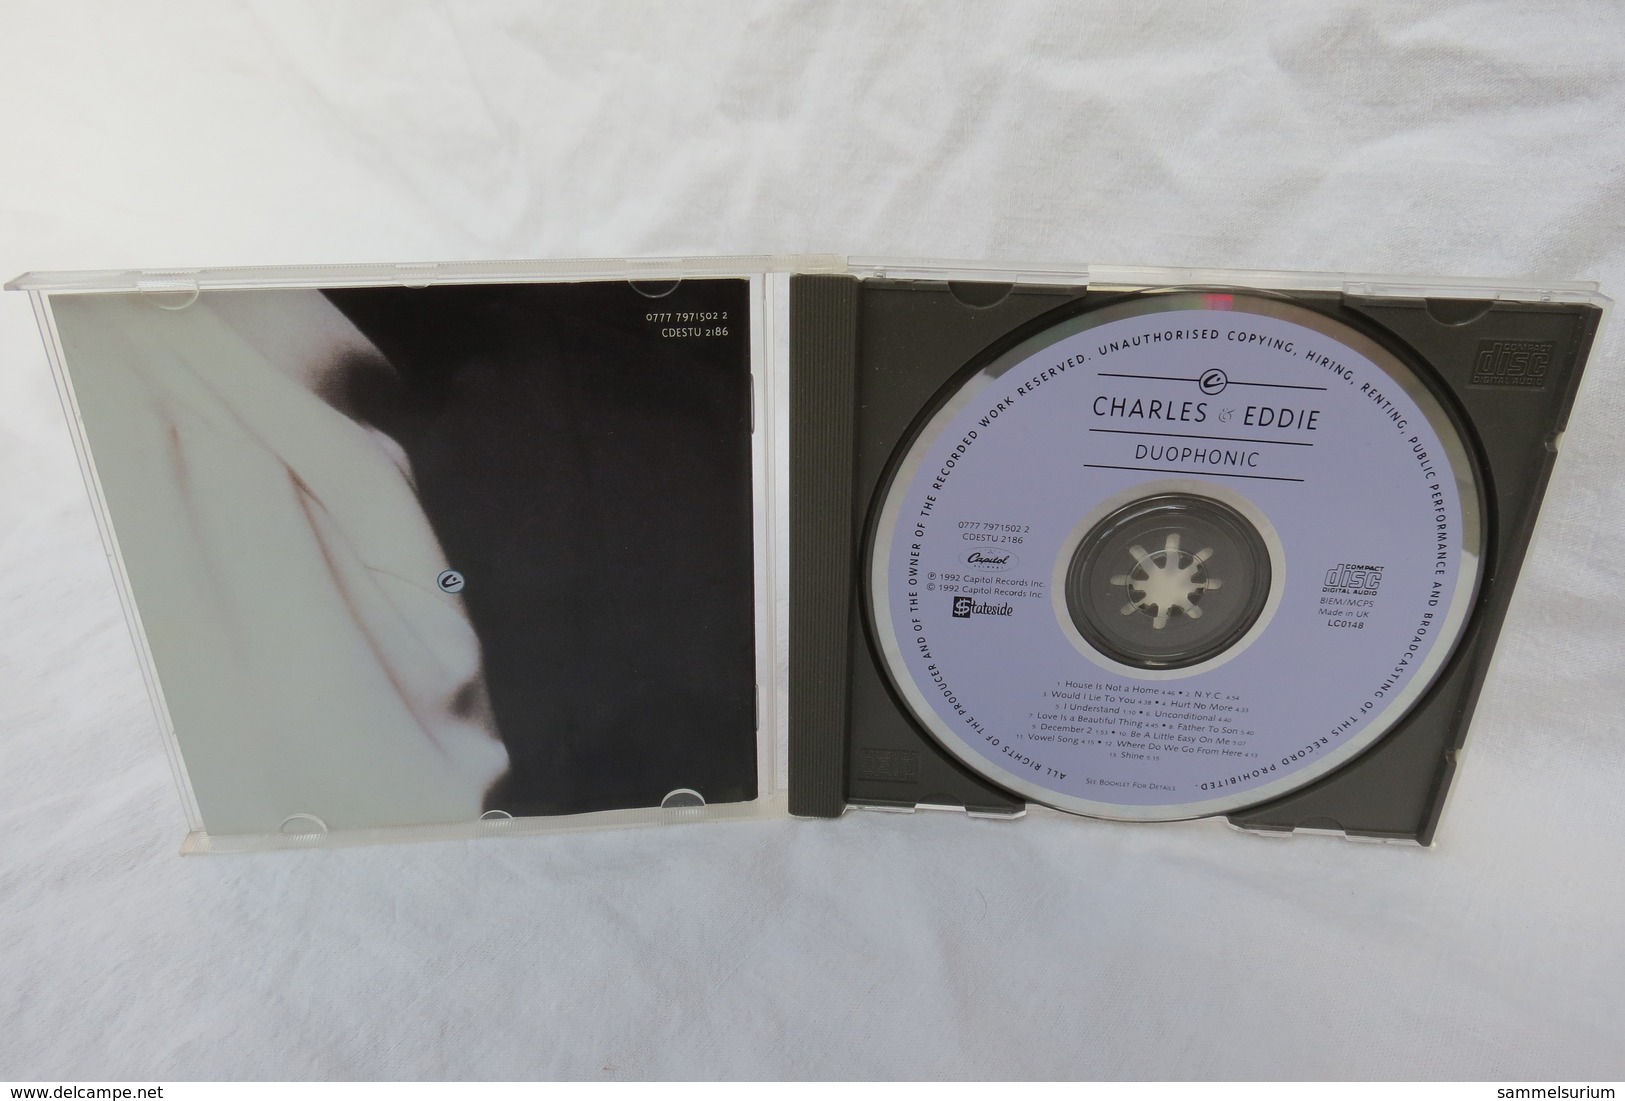 CD "Charles & Eddie" Duophonic - Soul - R&B